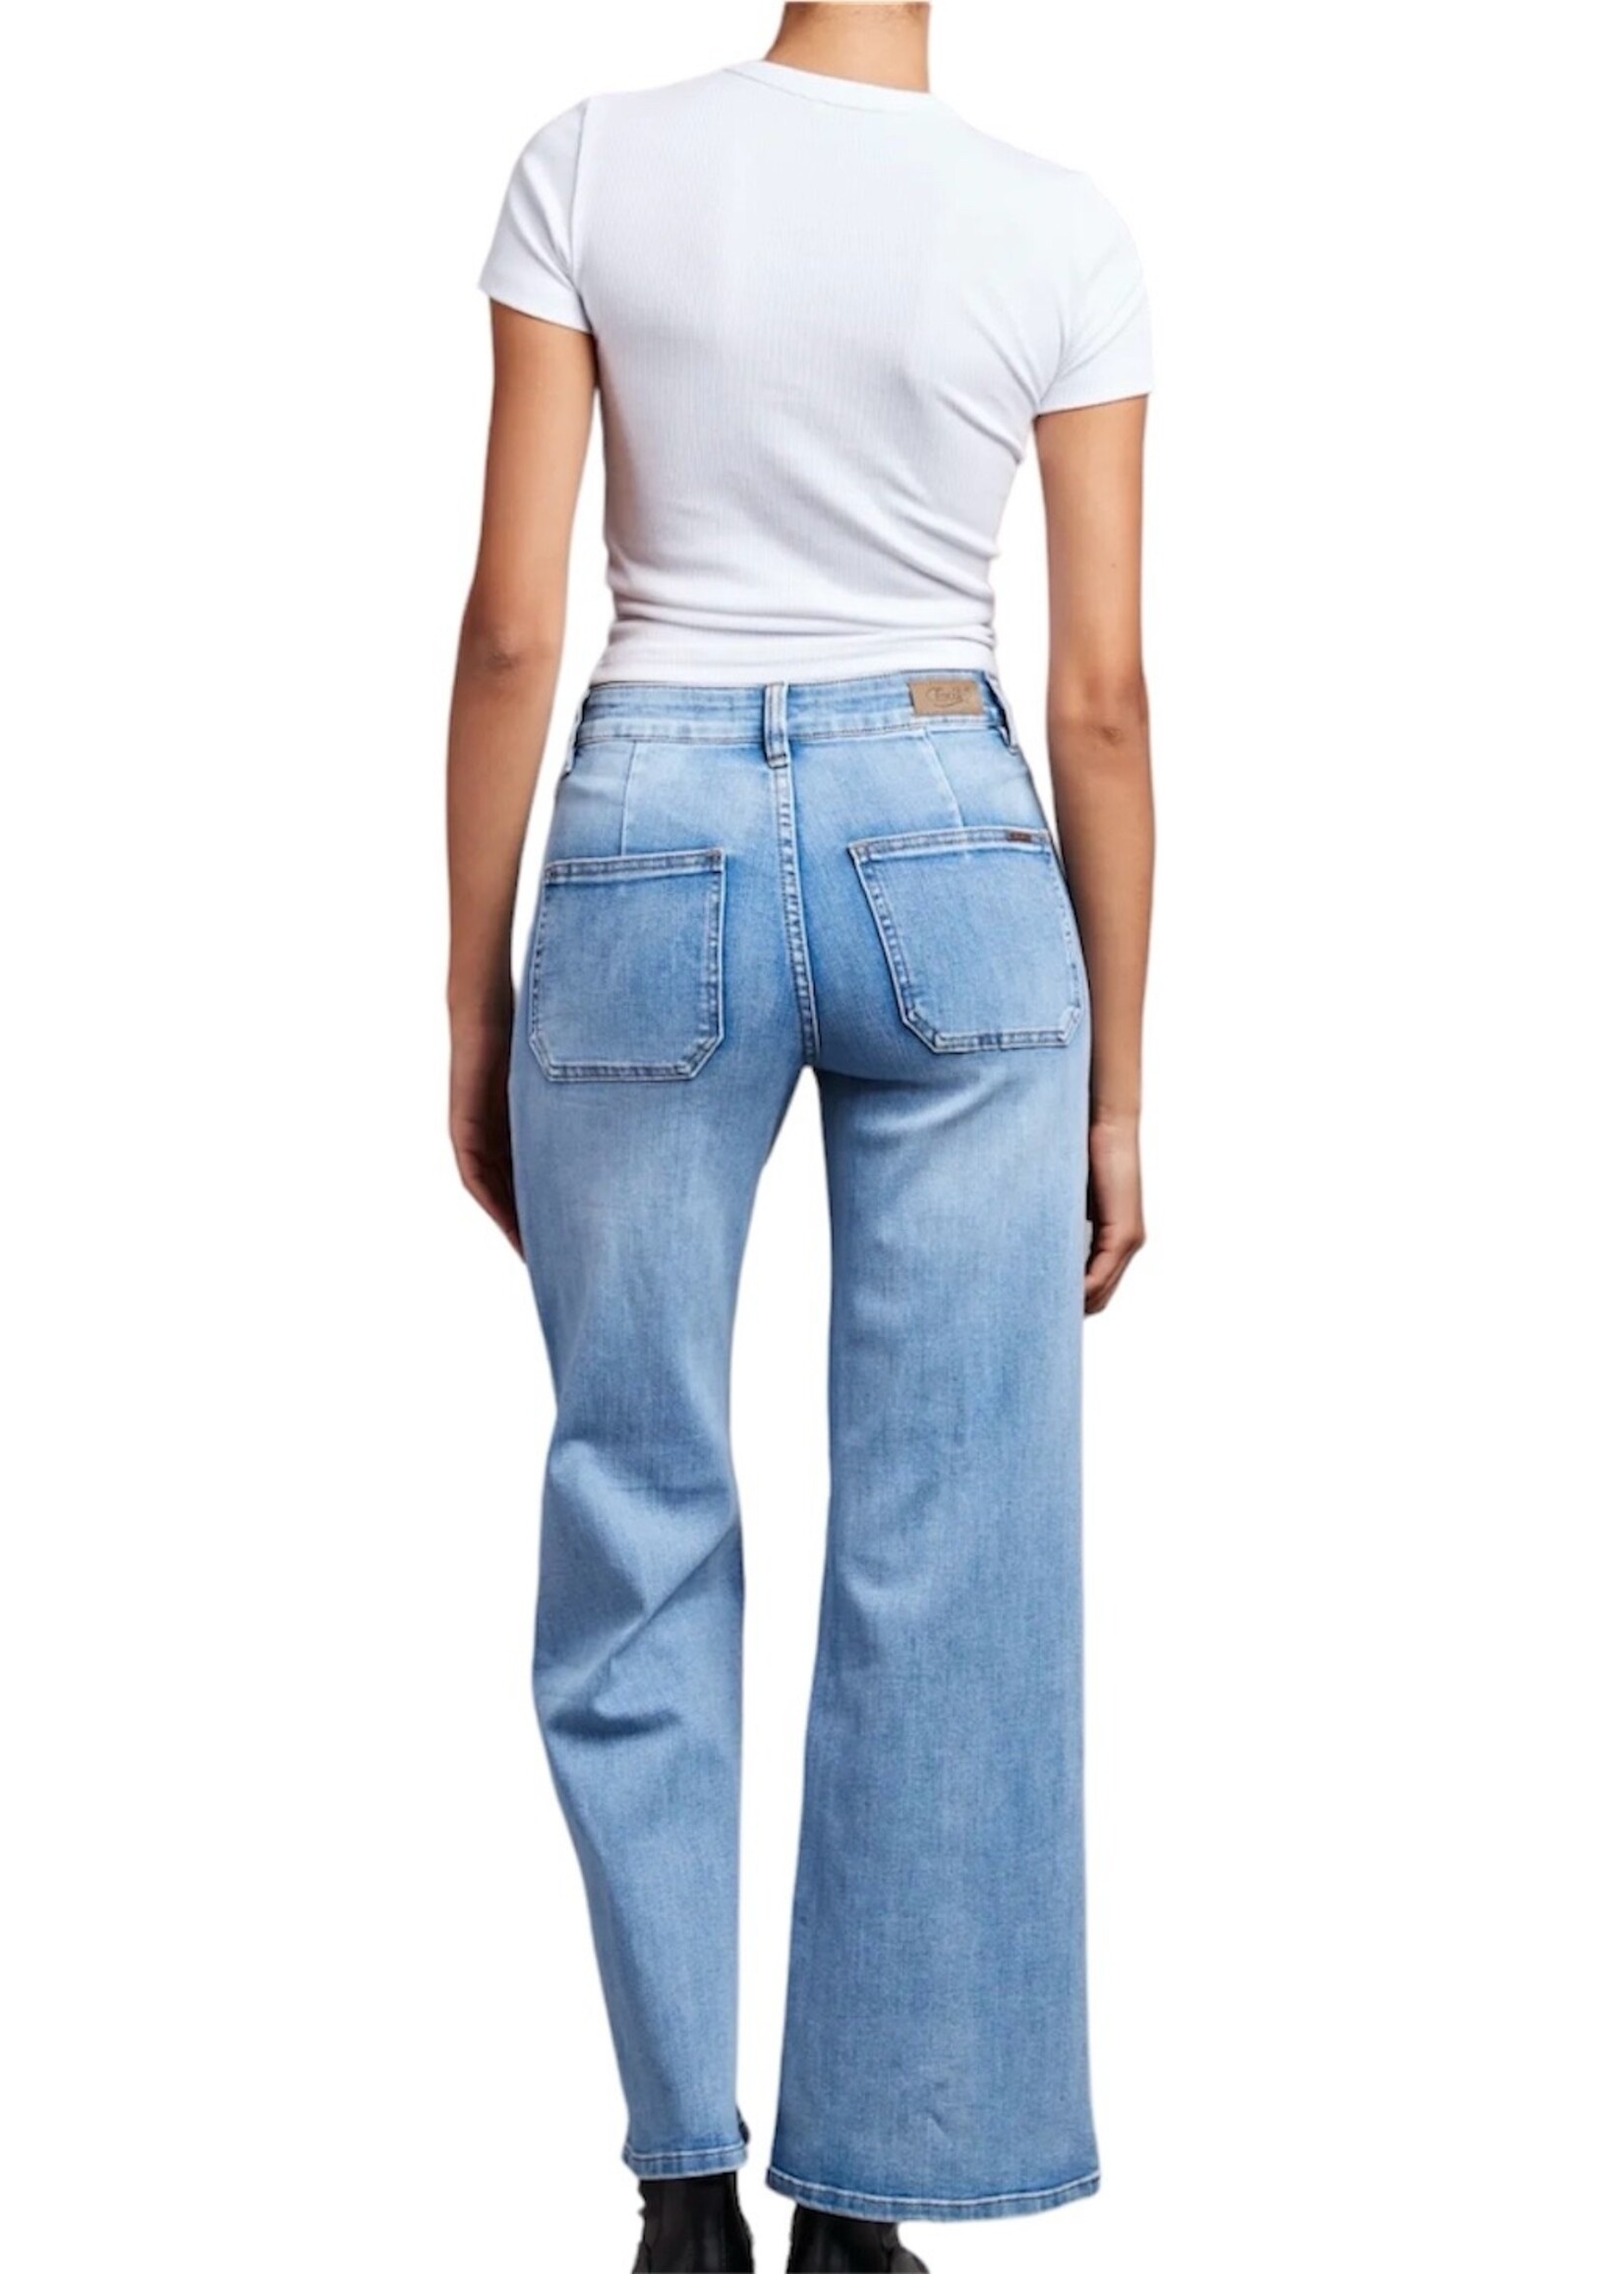 Victoria 1 Jeans